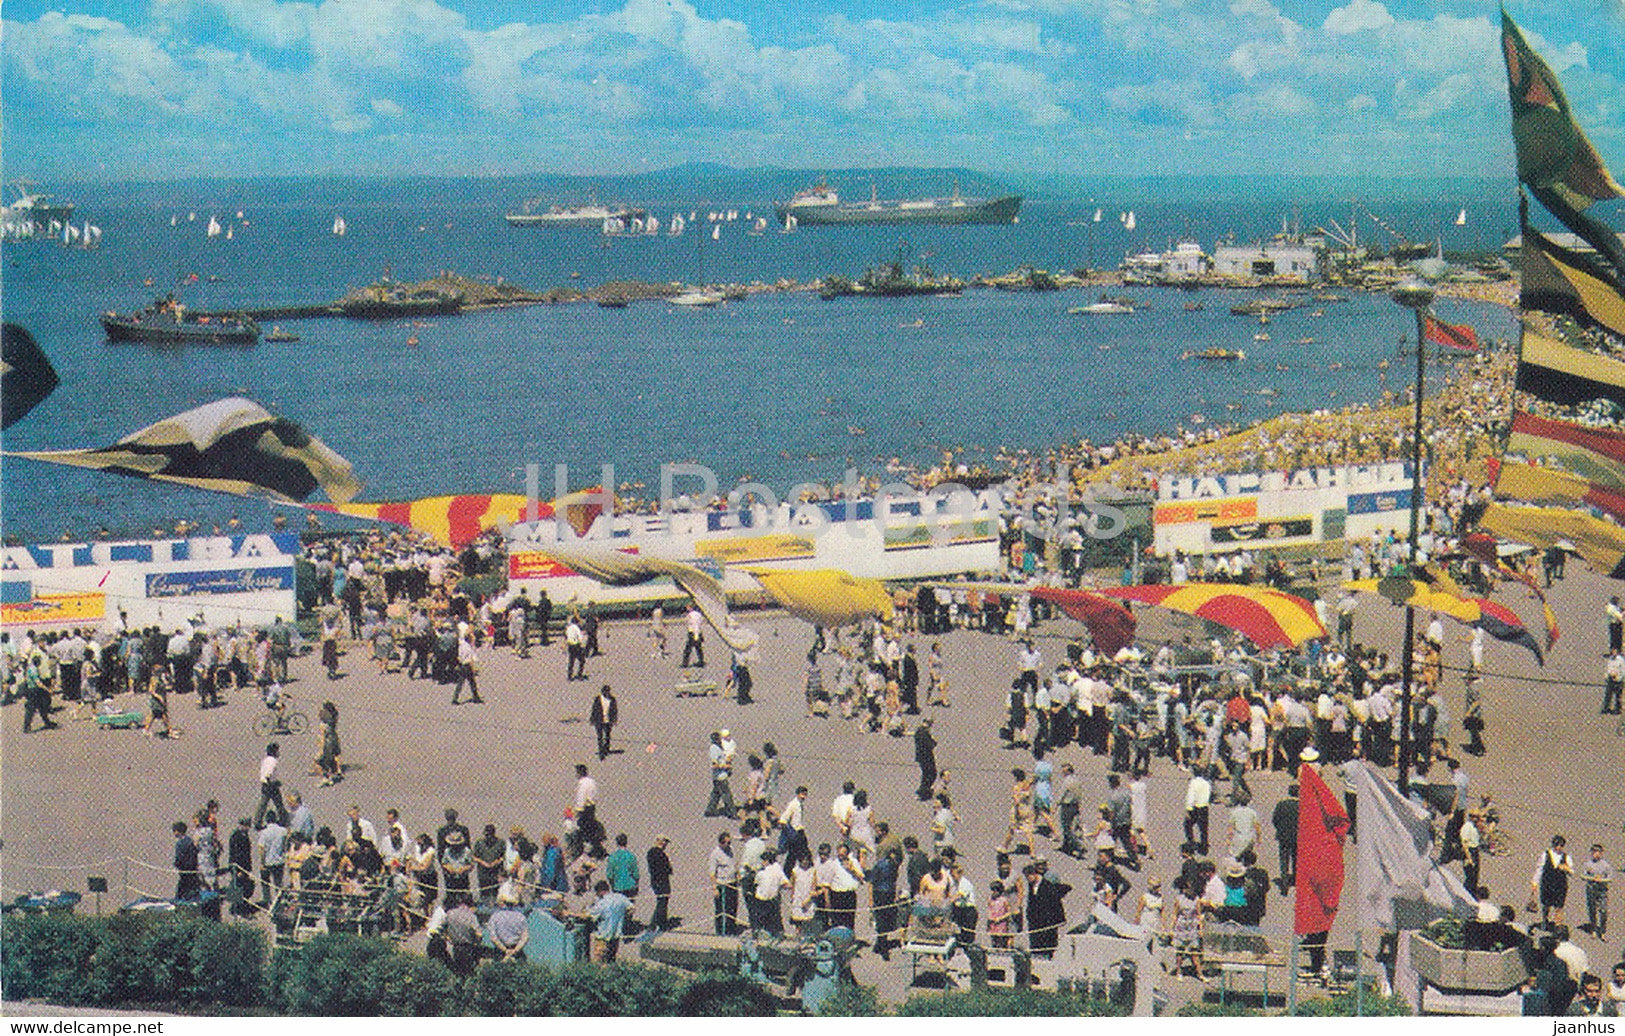 Vladivostok - Fisherman's day at sports harbor - 1973 - Russia USSR - unused - JH Postcards